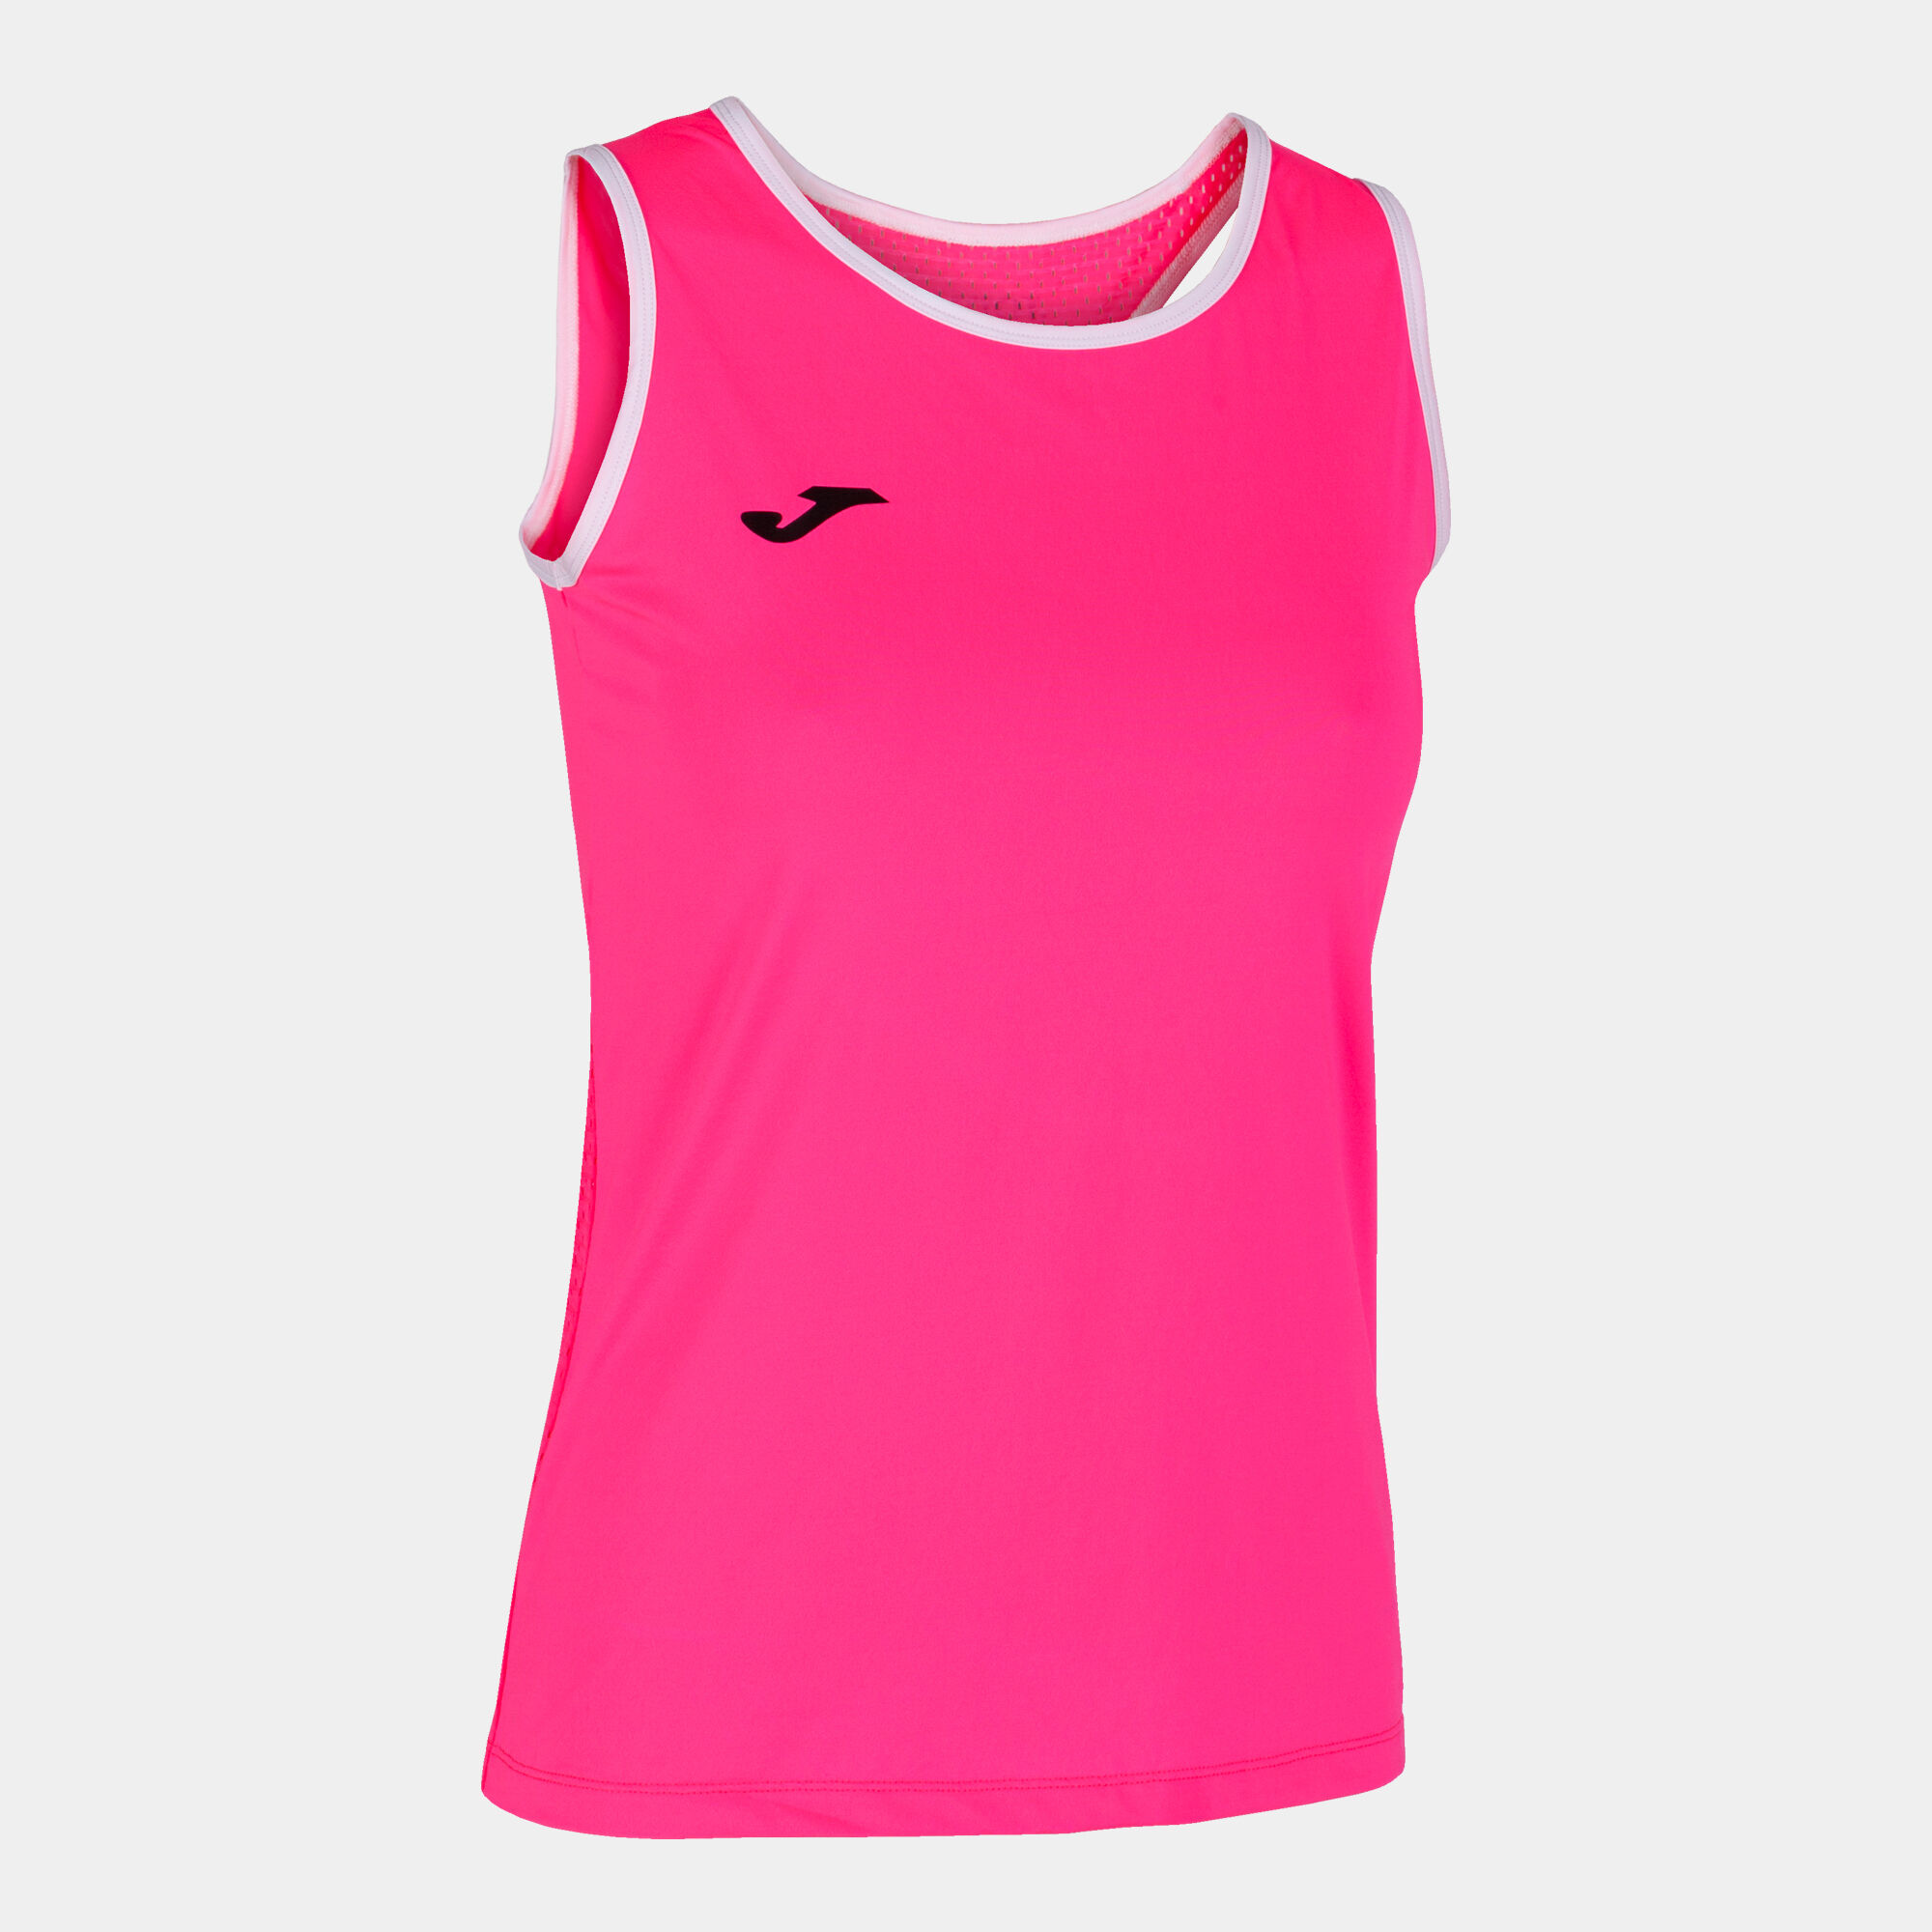 Camiseta tirantes mujer Break rosa flúor